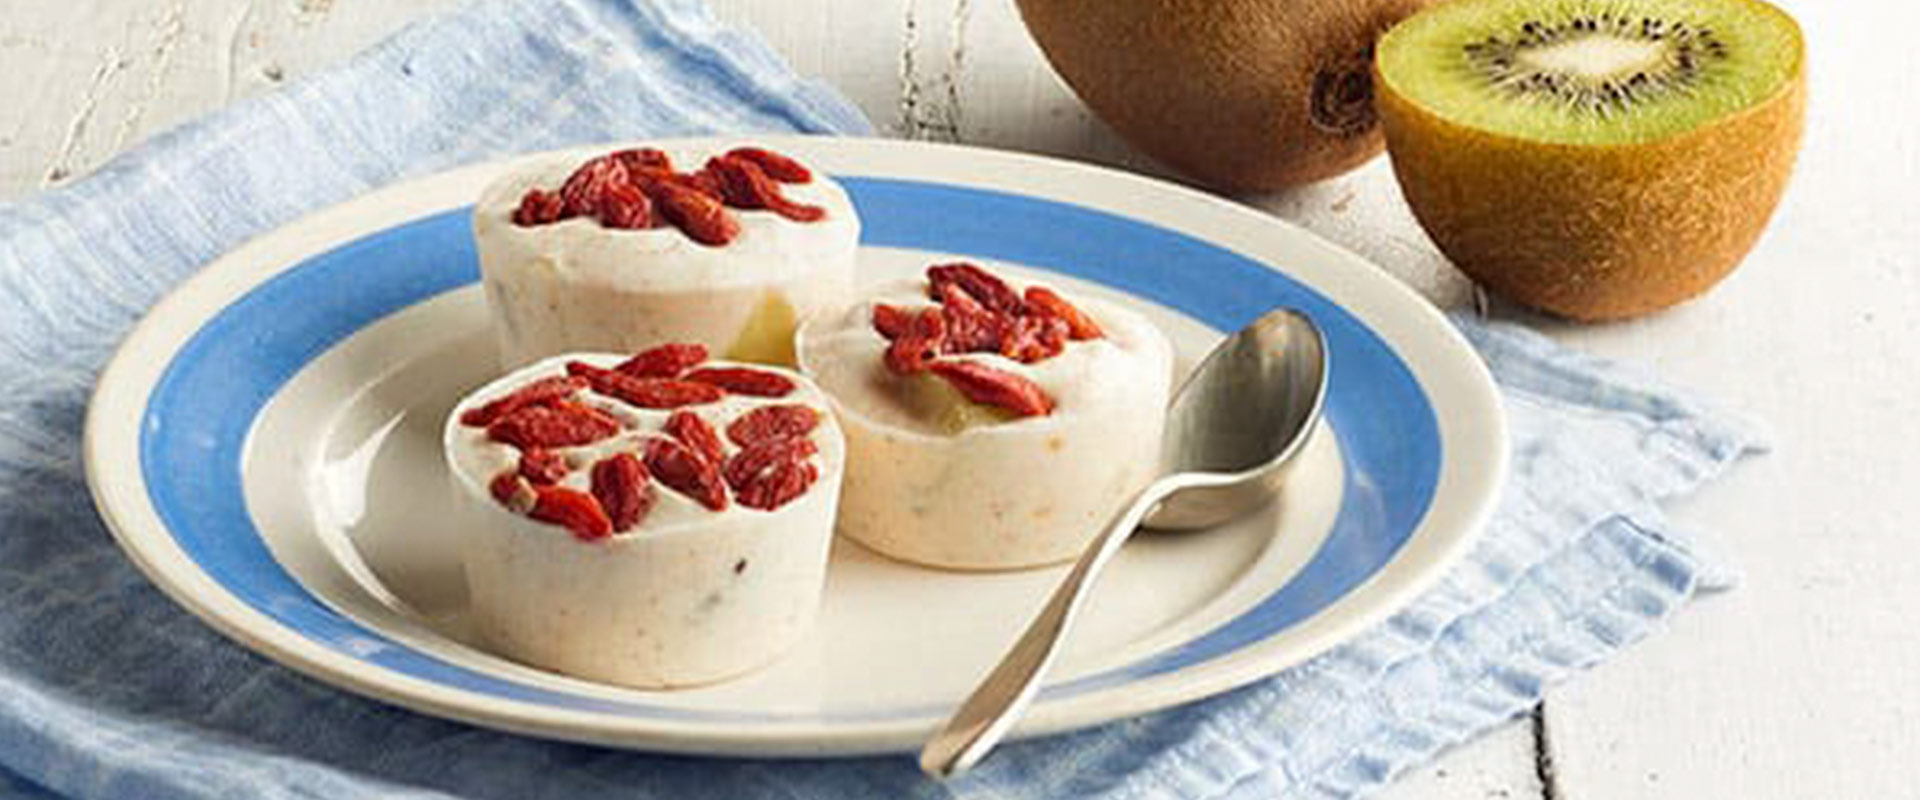 Recipe15-Frozen-kiwifruit-yoghurt-04-thumbnail.jpg